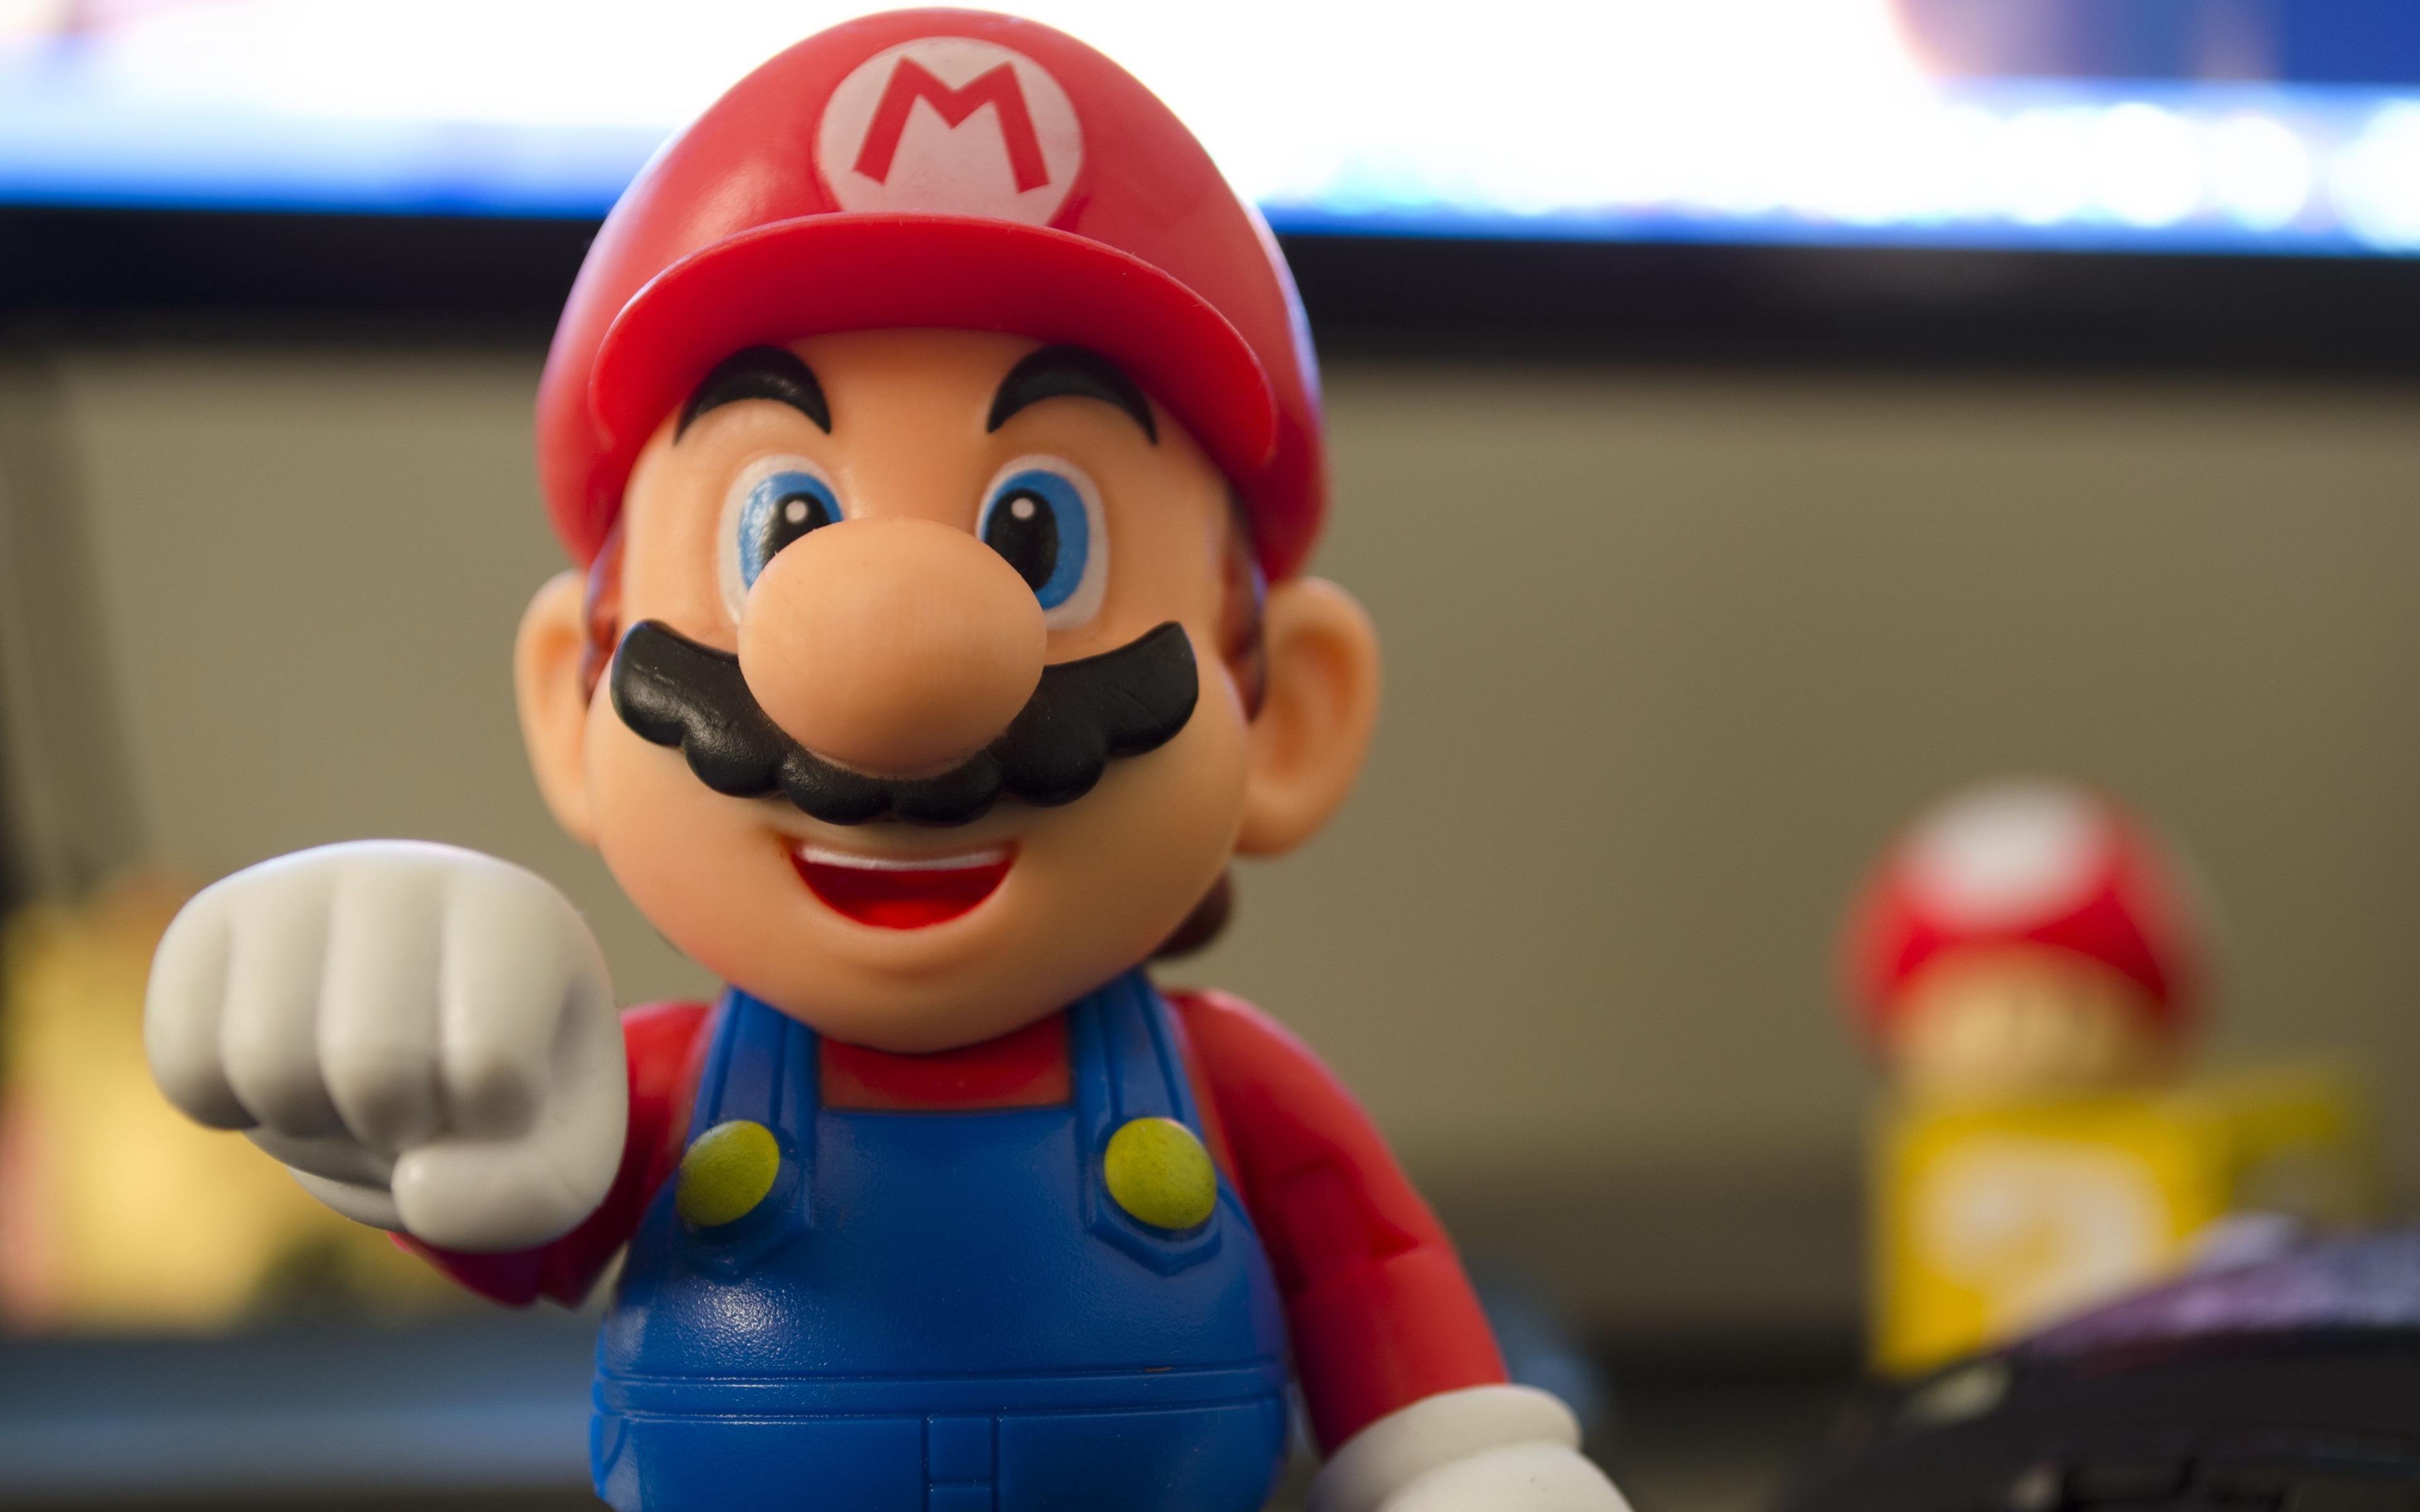 Super Mario Figurine for 3840 x 2400 Widescreen resolution